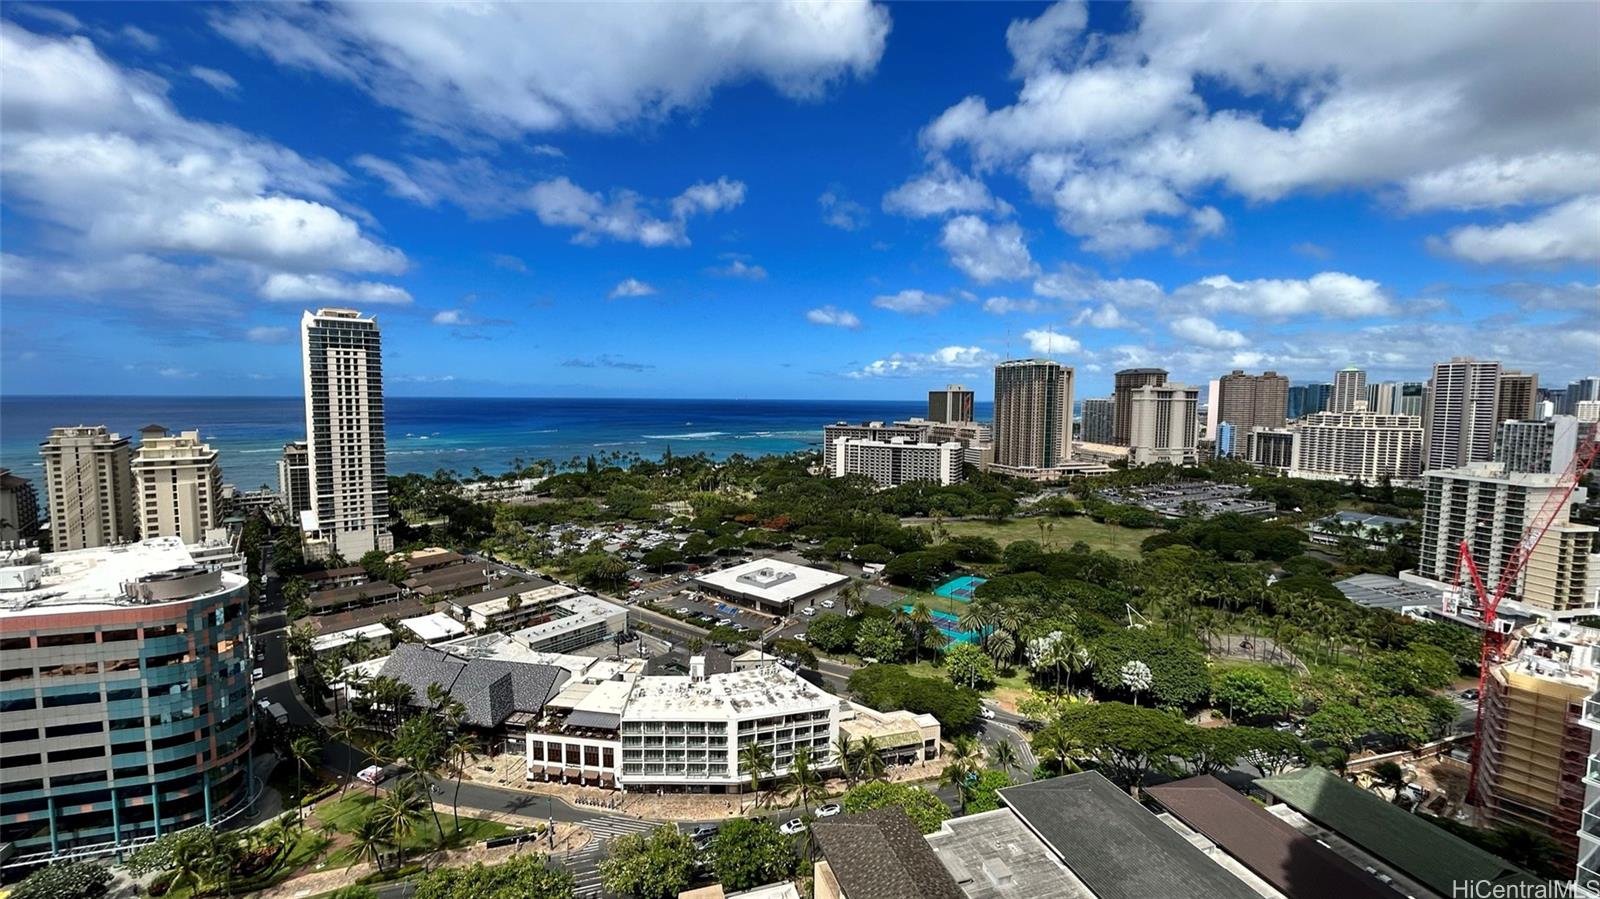 The Ritz-Carlton Residences Twr 2 - 383 Kalaimoku 2139 Kuhio Avenue #2806, Honolulu, HI 96815